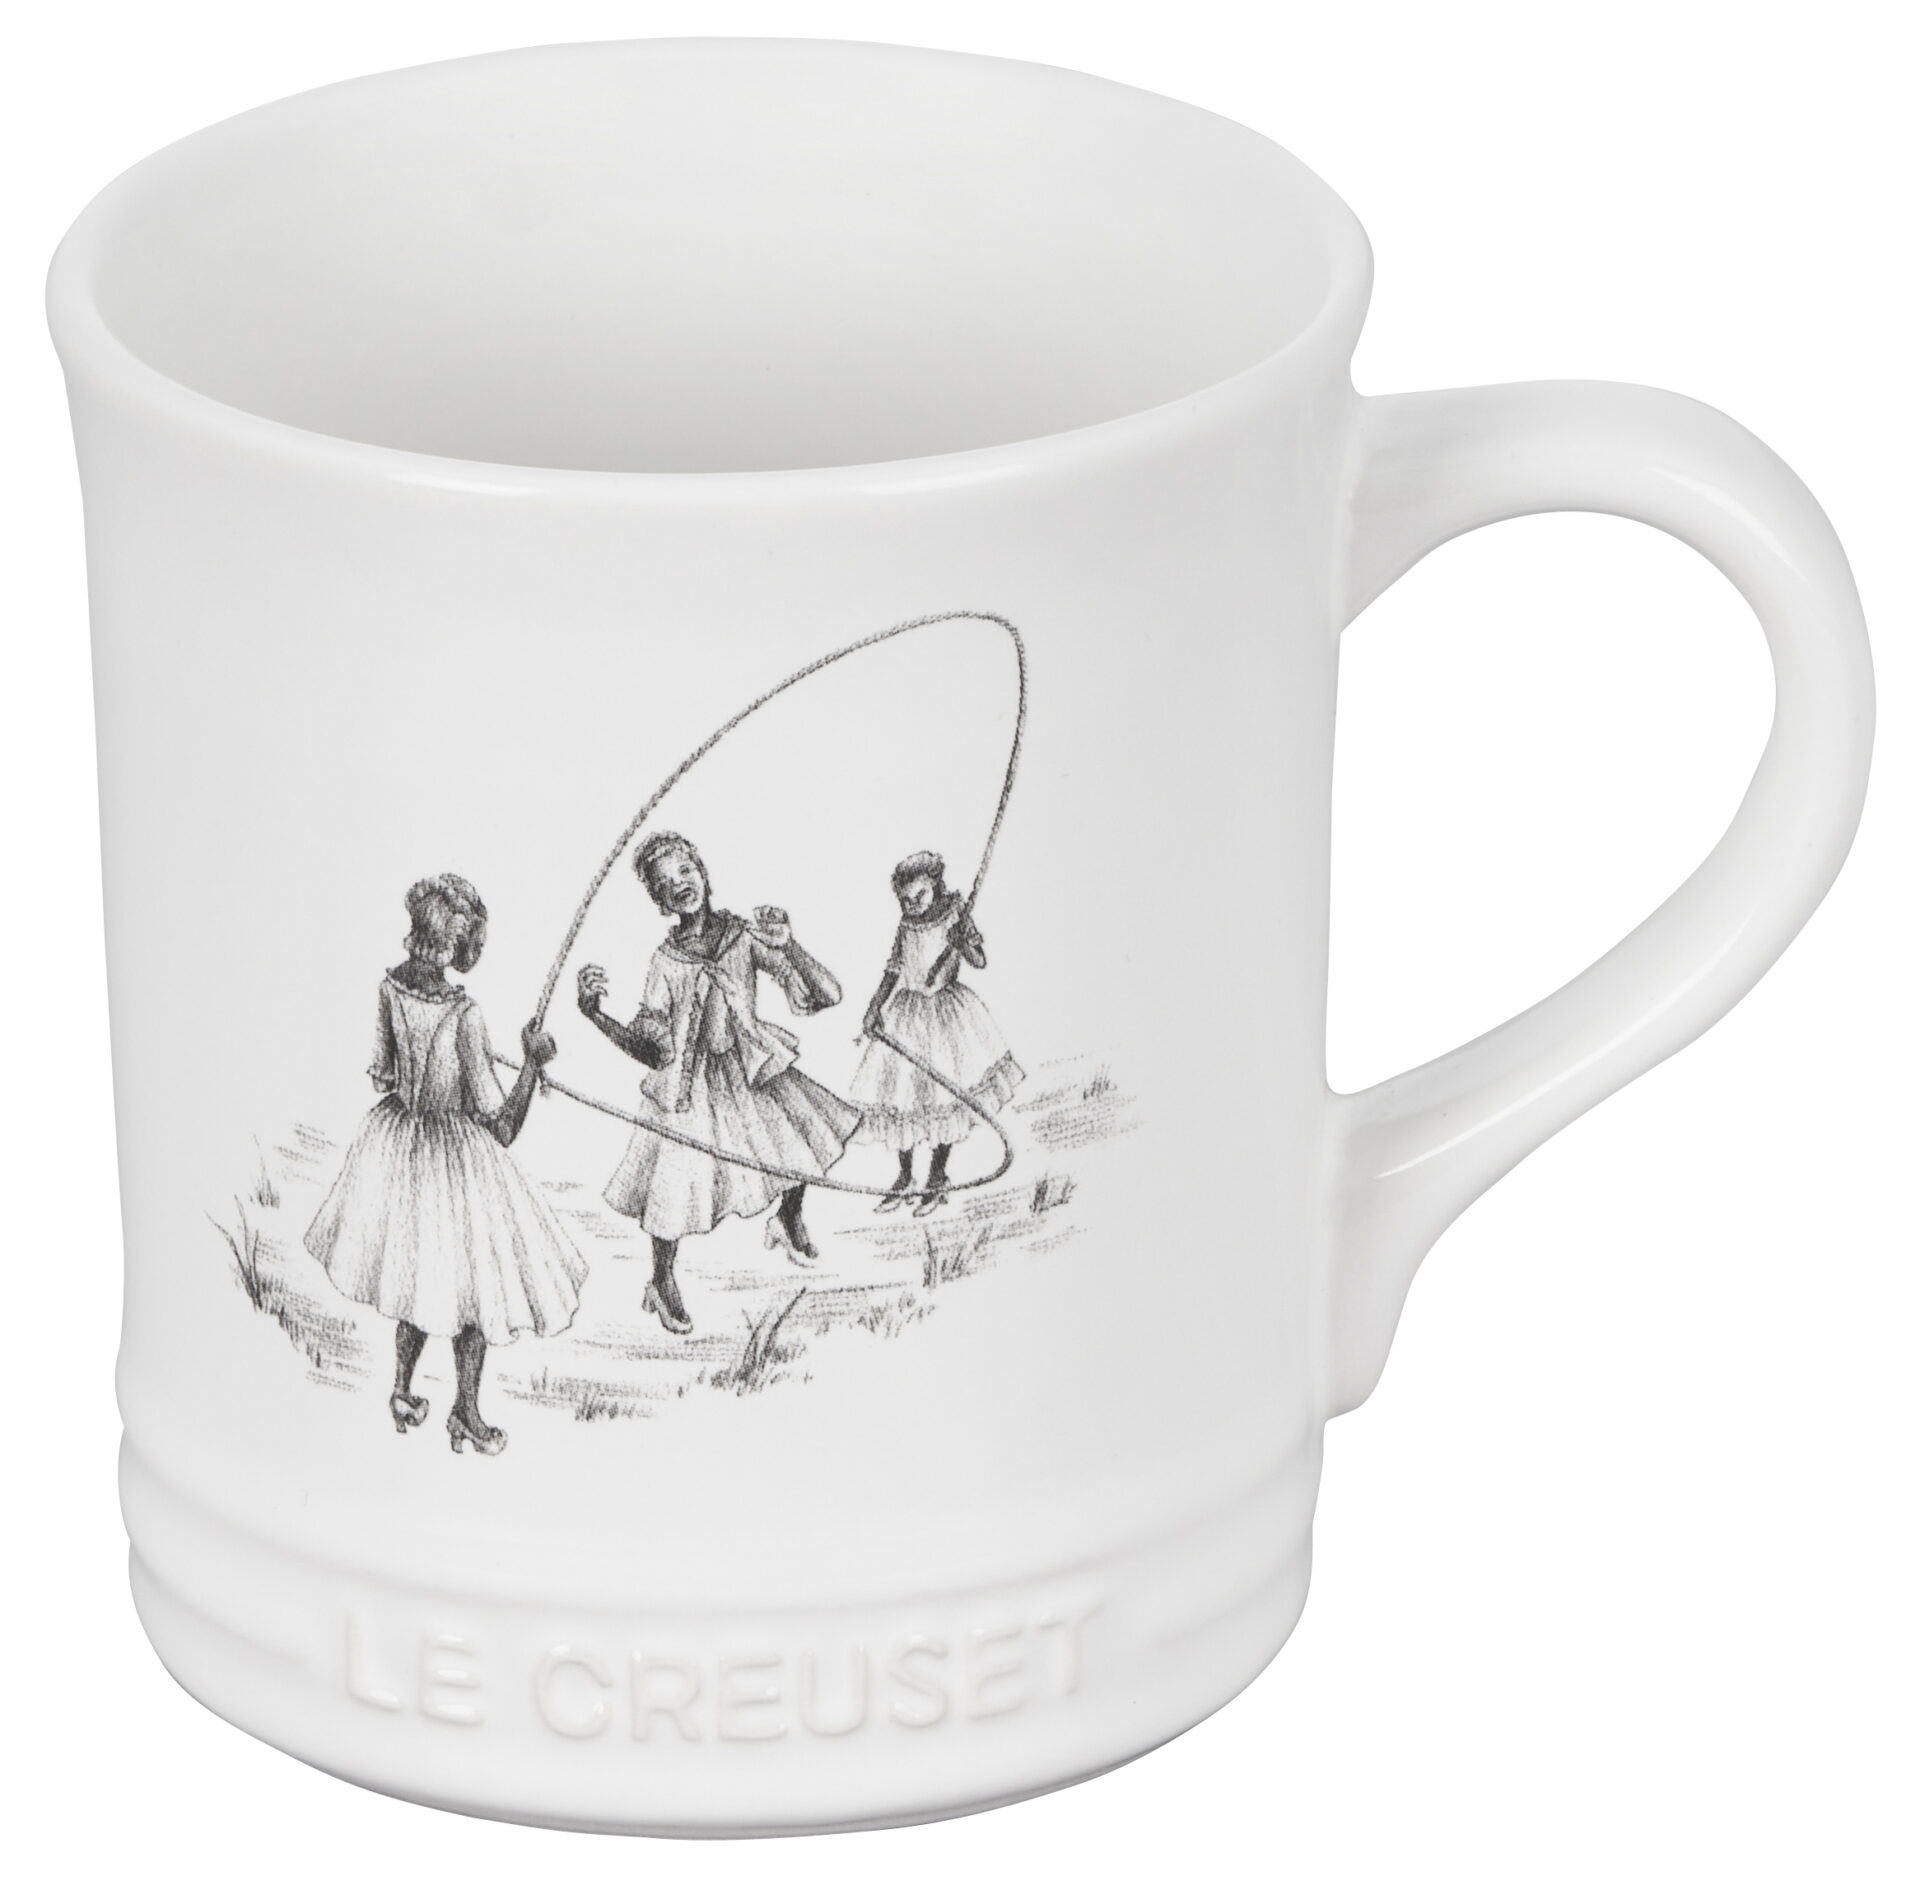 Le Creuset Destination Mug | Stoneware White, 12 fl. oz.